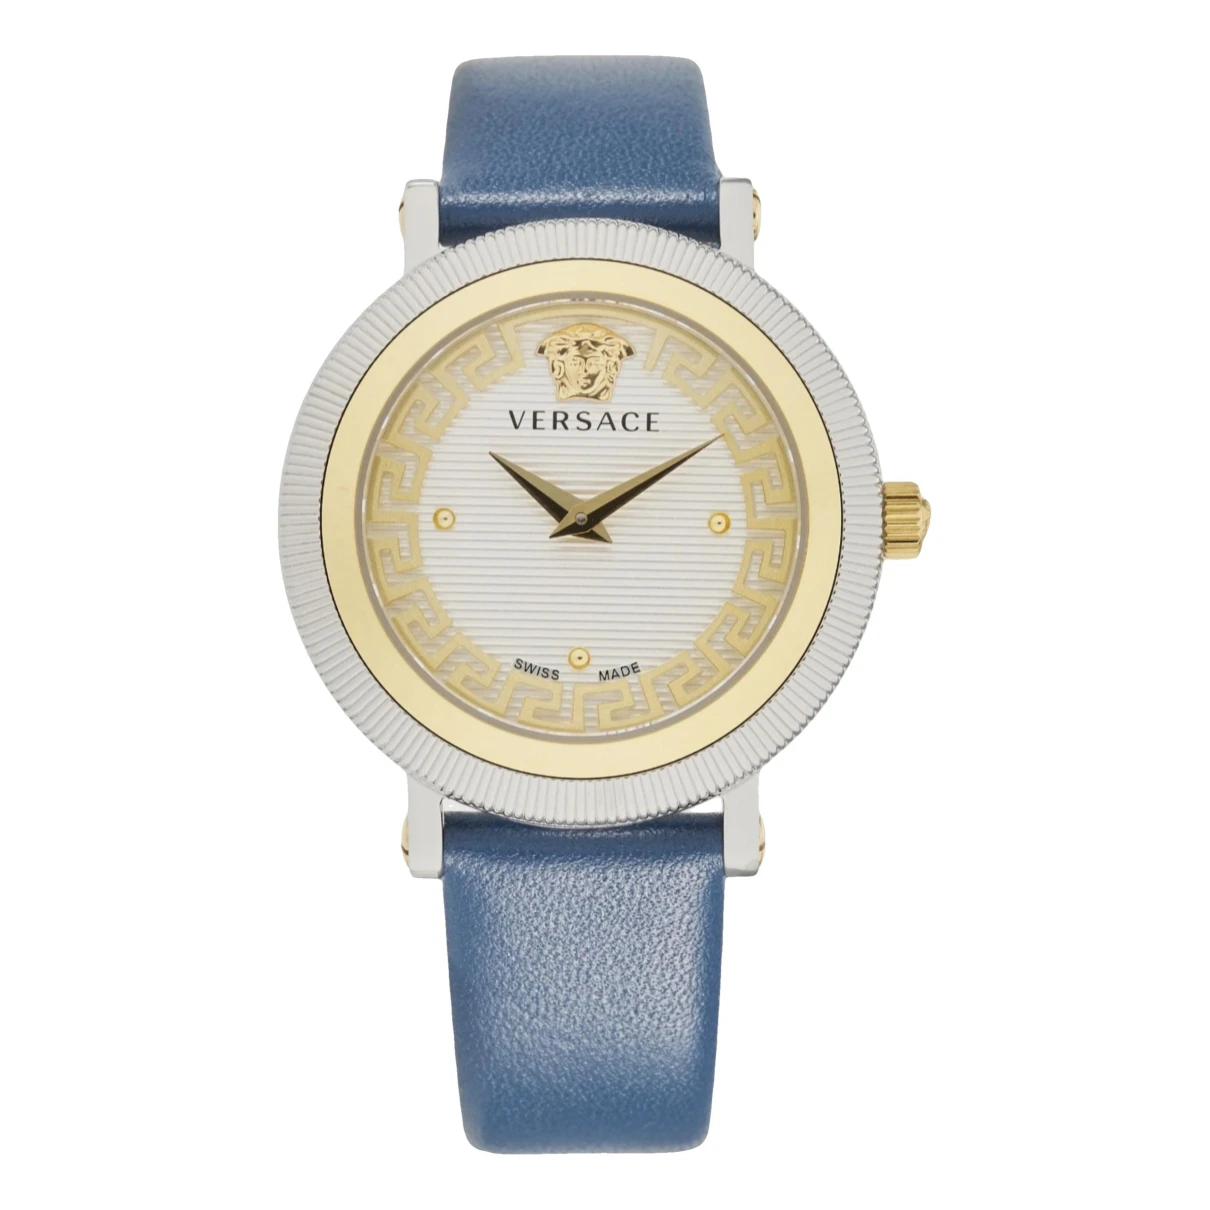 Pre-owned Versace Watch In Blue